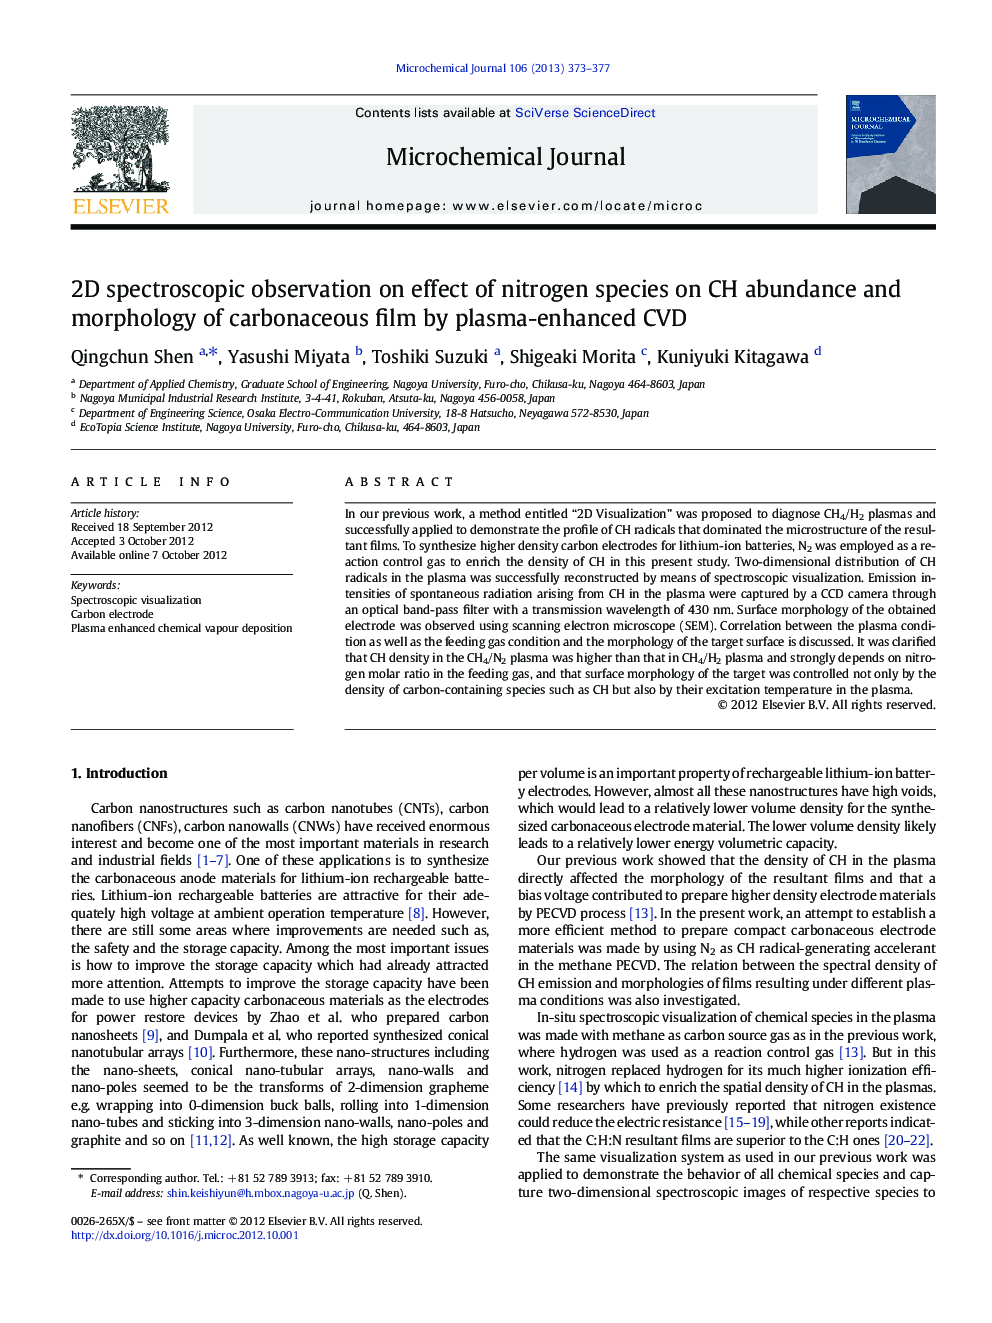 2D spectroscopic observation on effect of nitrogen species on CH abundance and morphology of carbonaceous film by plasma-enhanced CVD